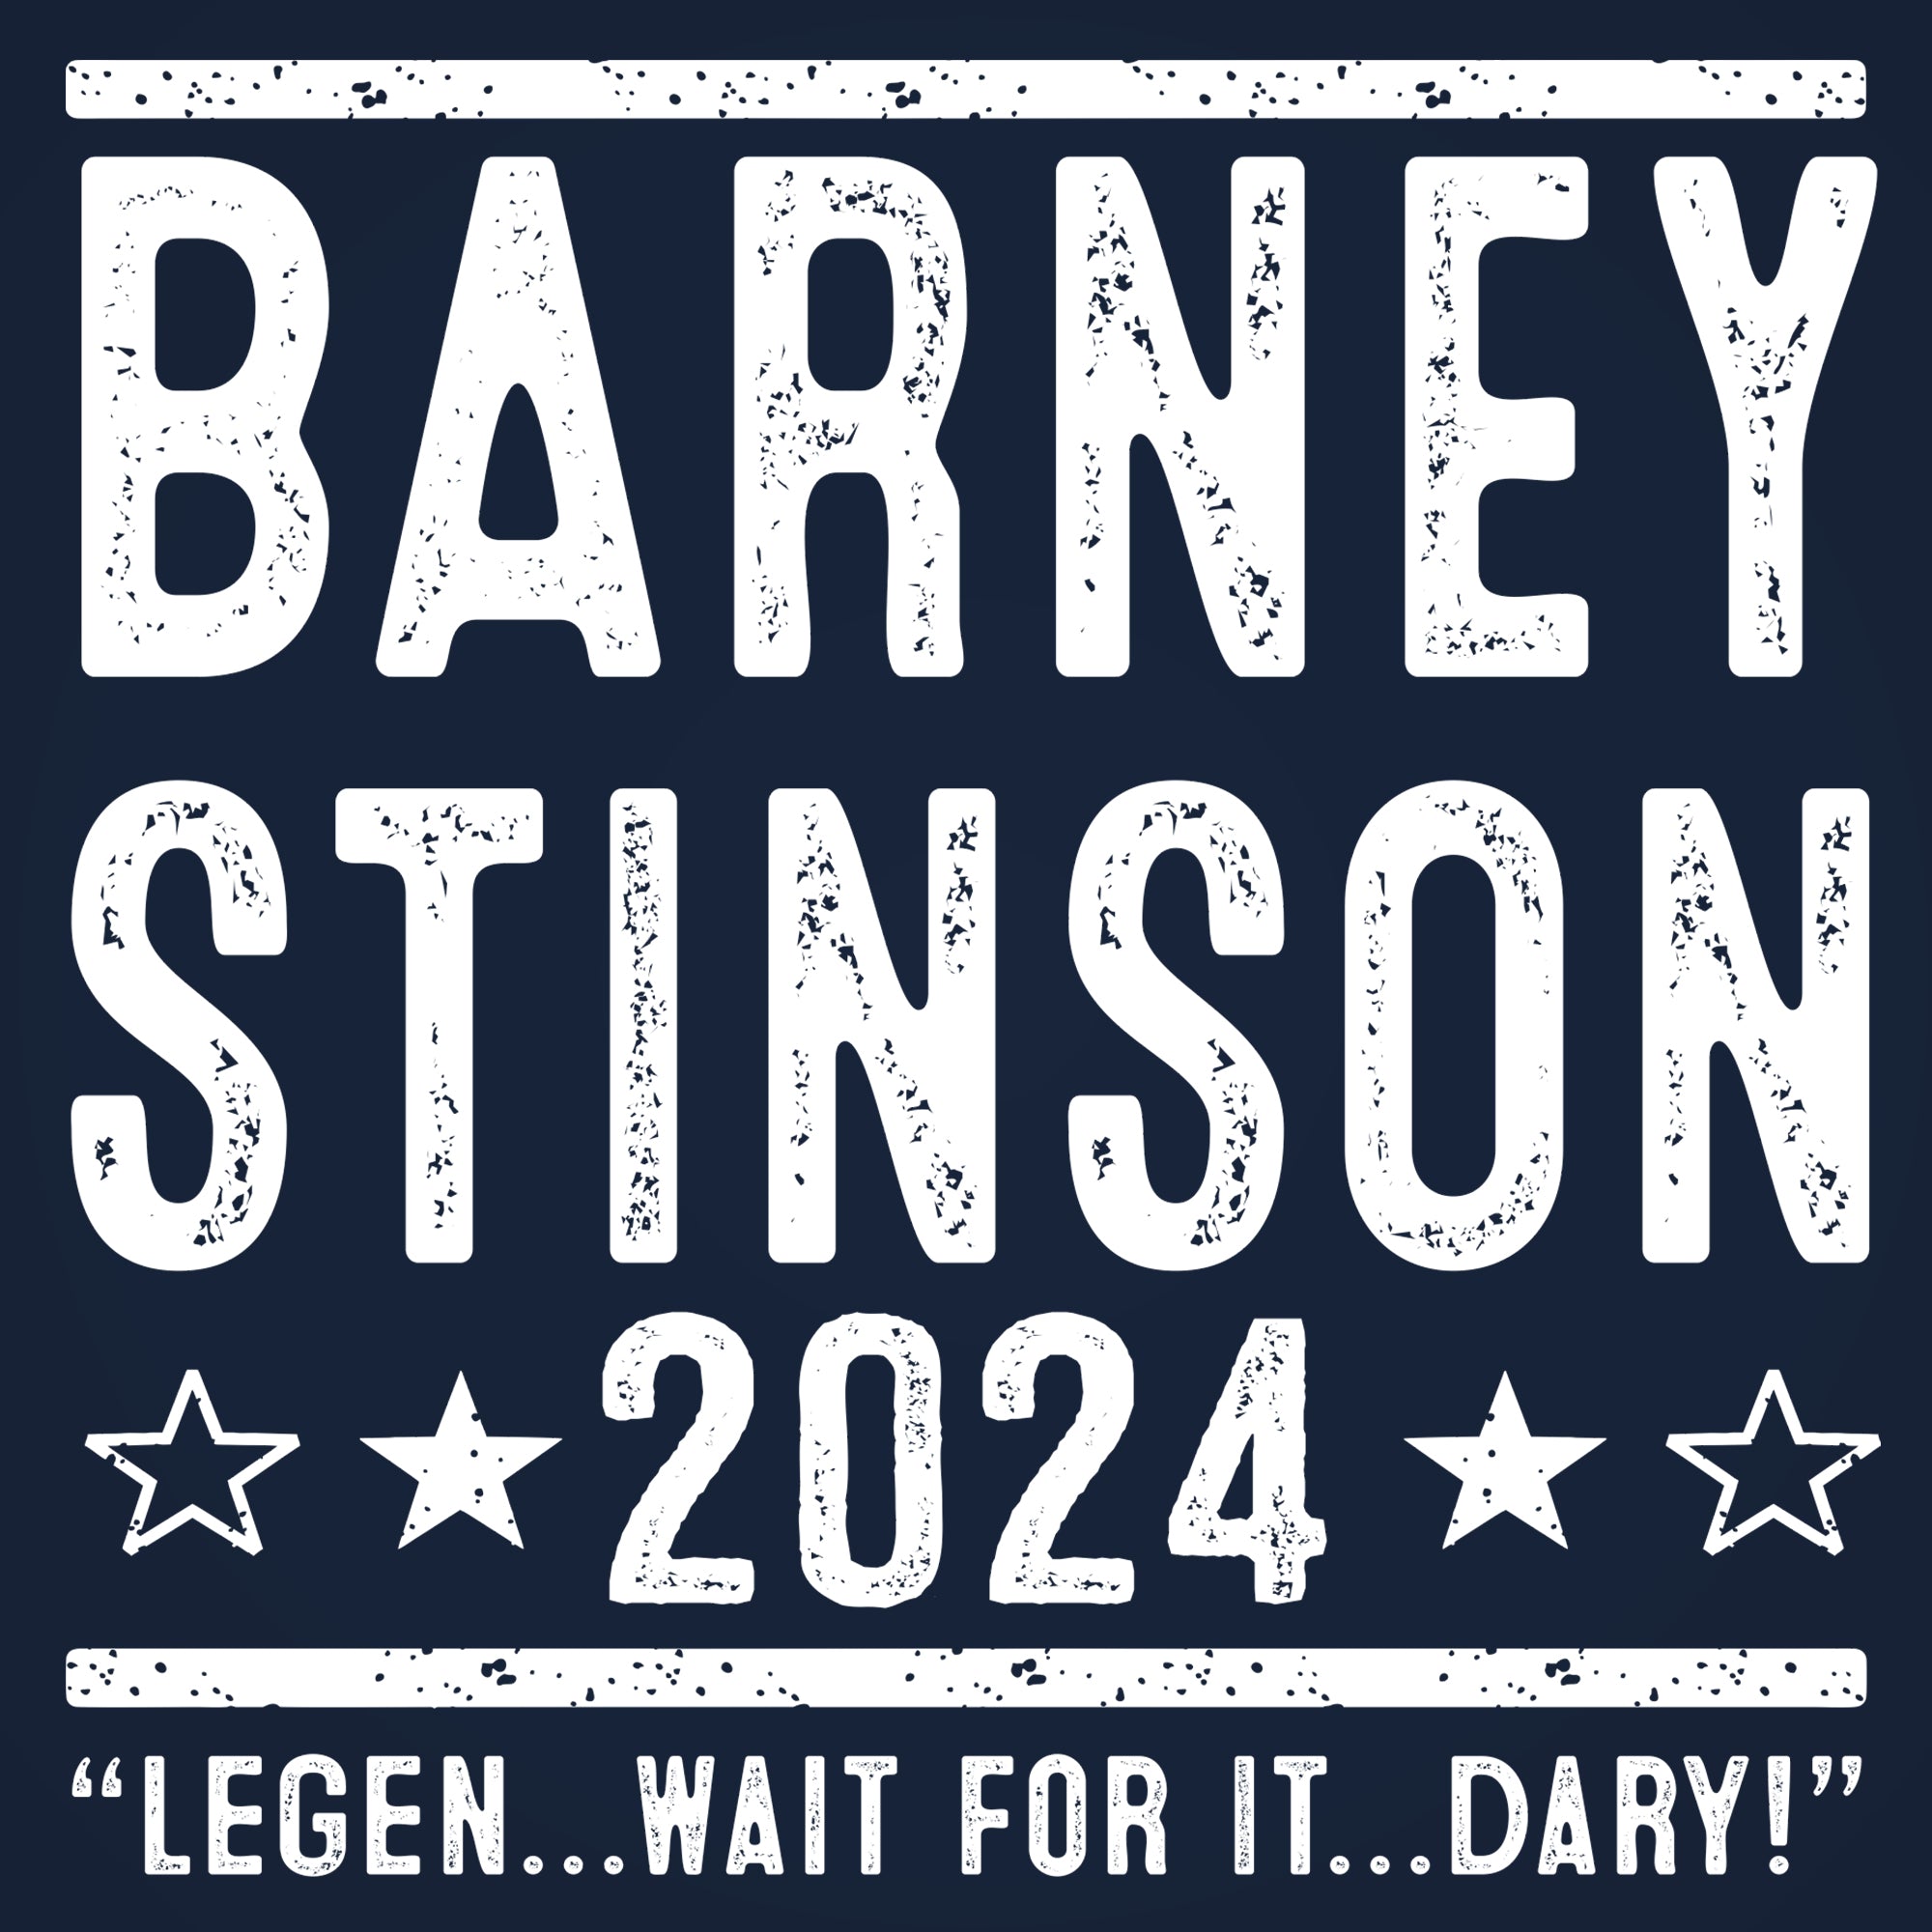 Barney Stinson 2024 Election Tshirt - Donkey Tees